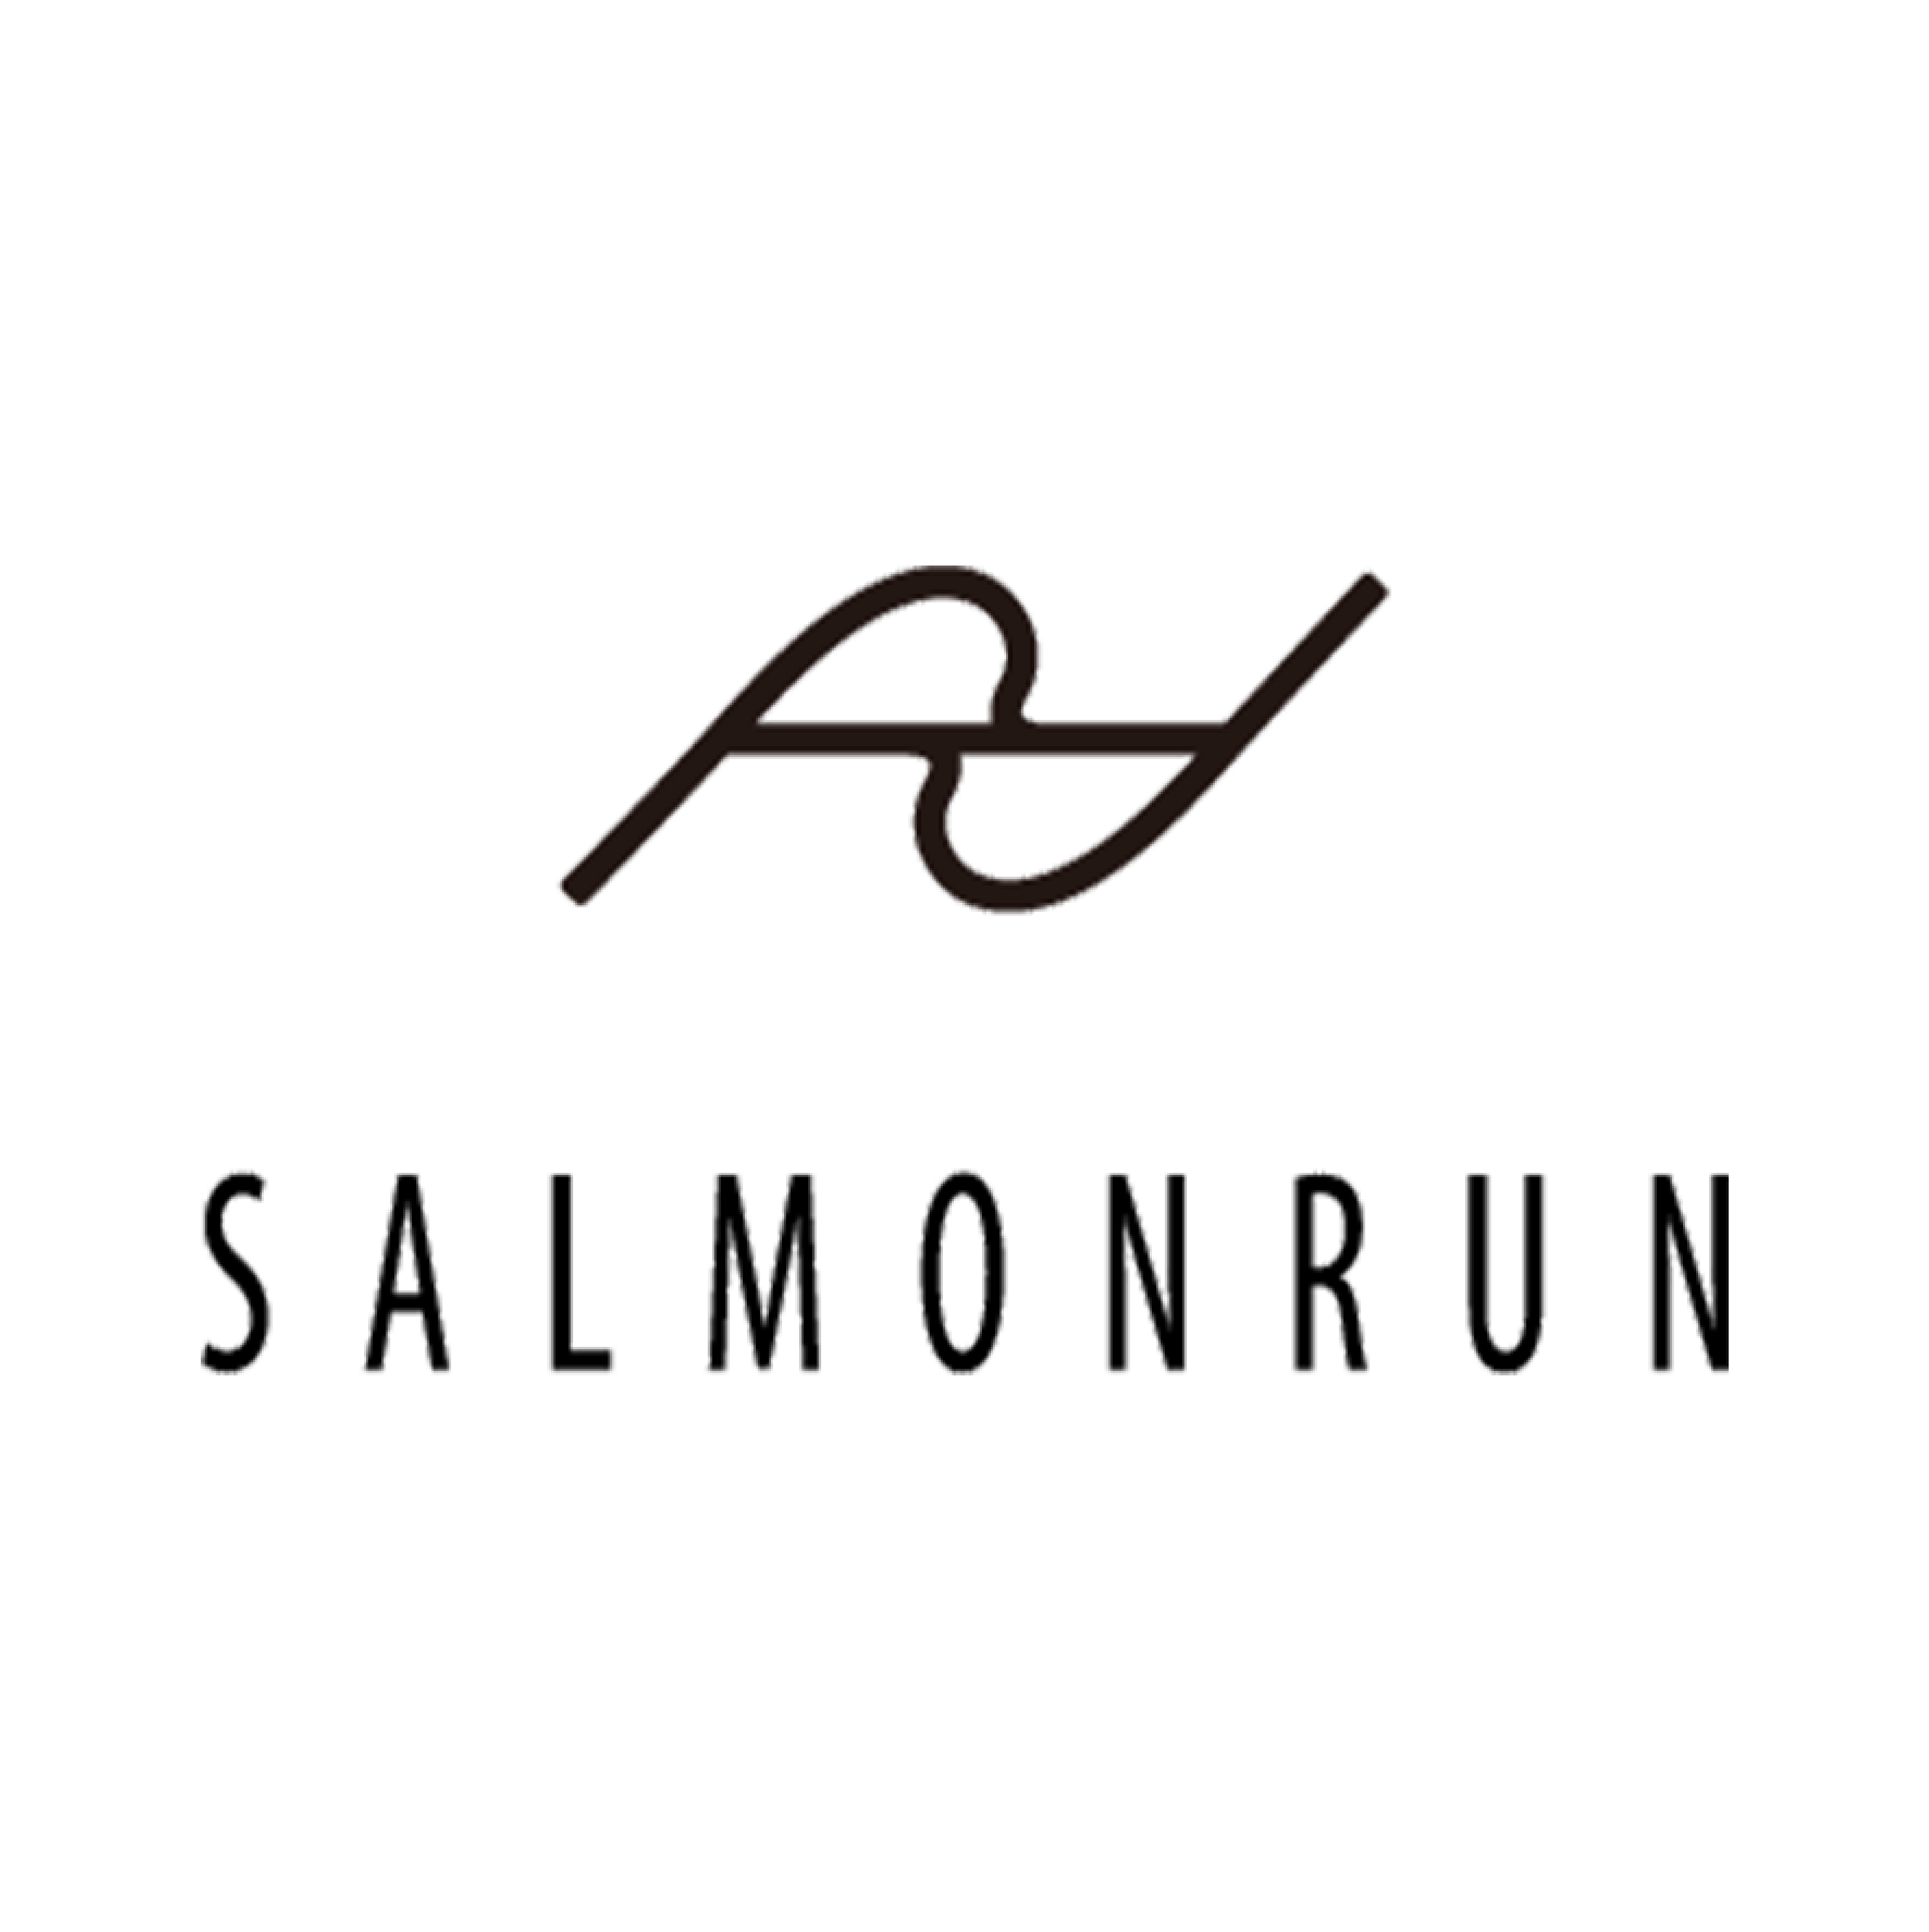 Salmonrun Studio